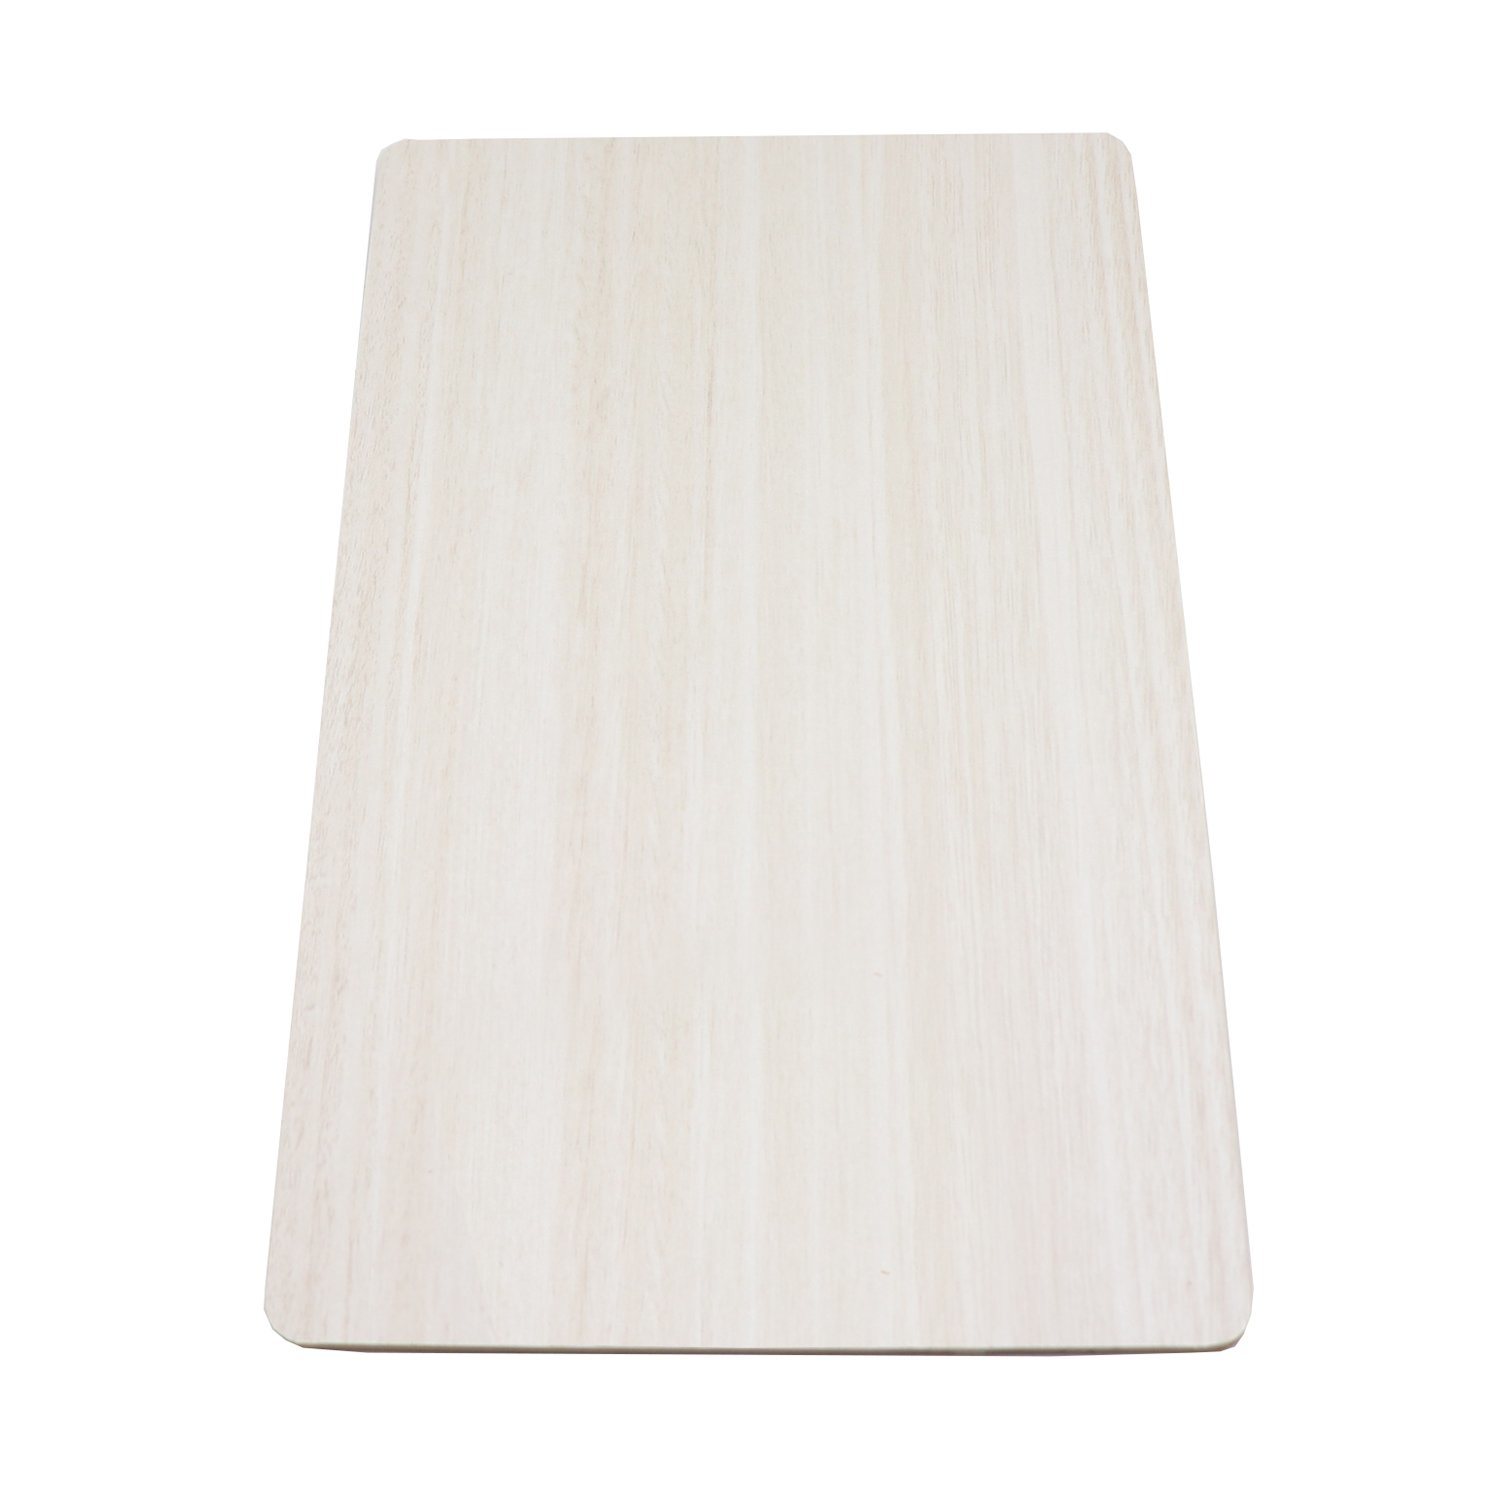 Excellent Grade Multi Design Melamine Faced Plywood Board for Home Decoration